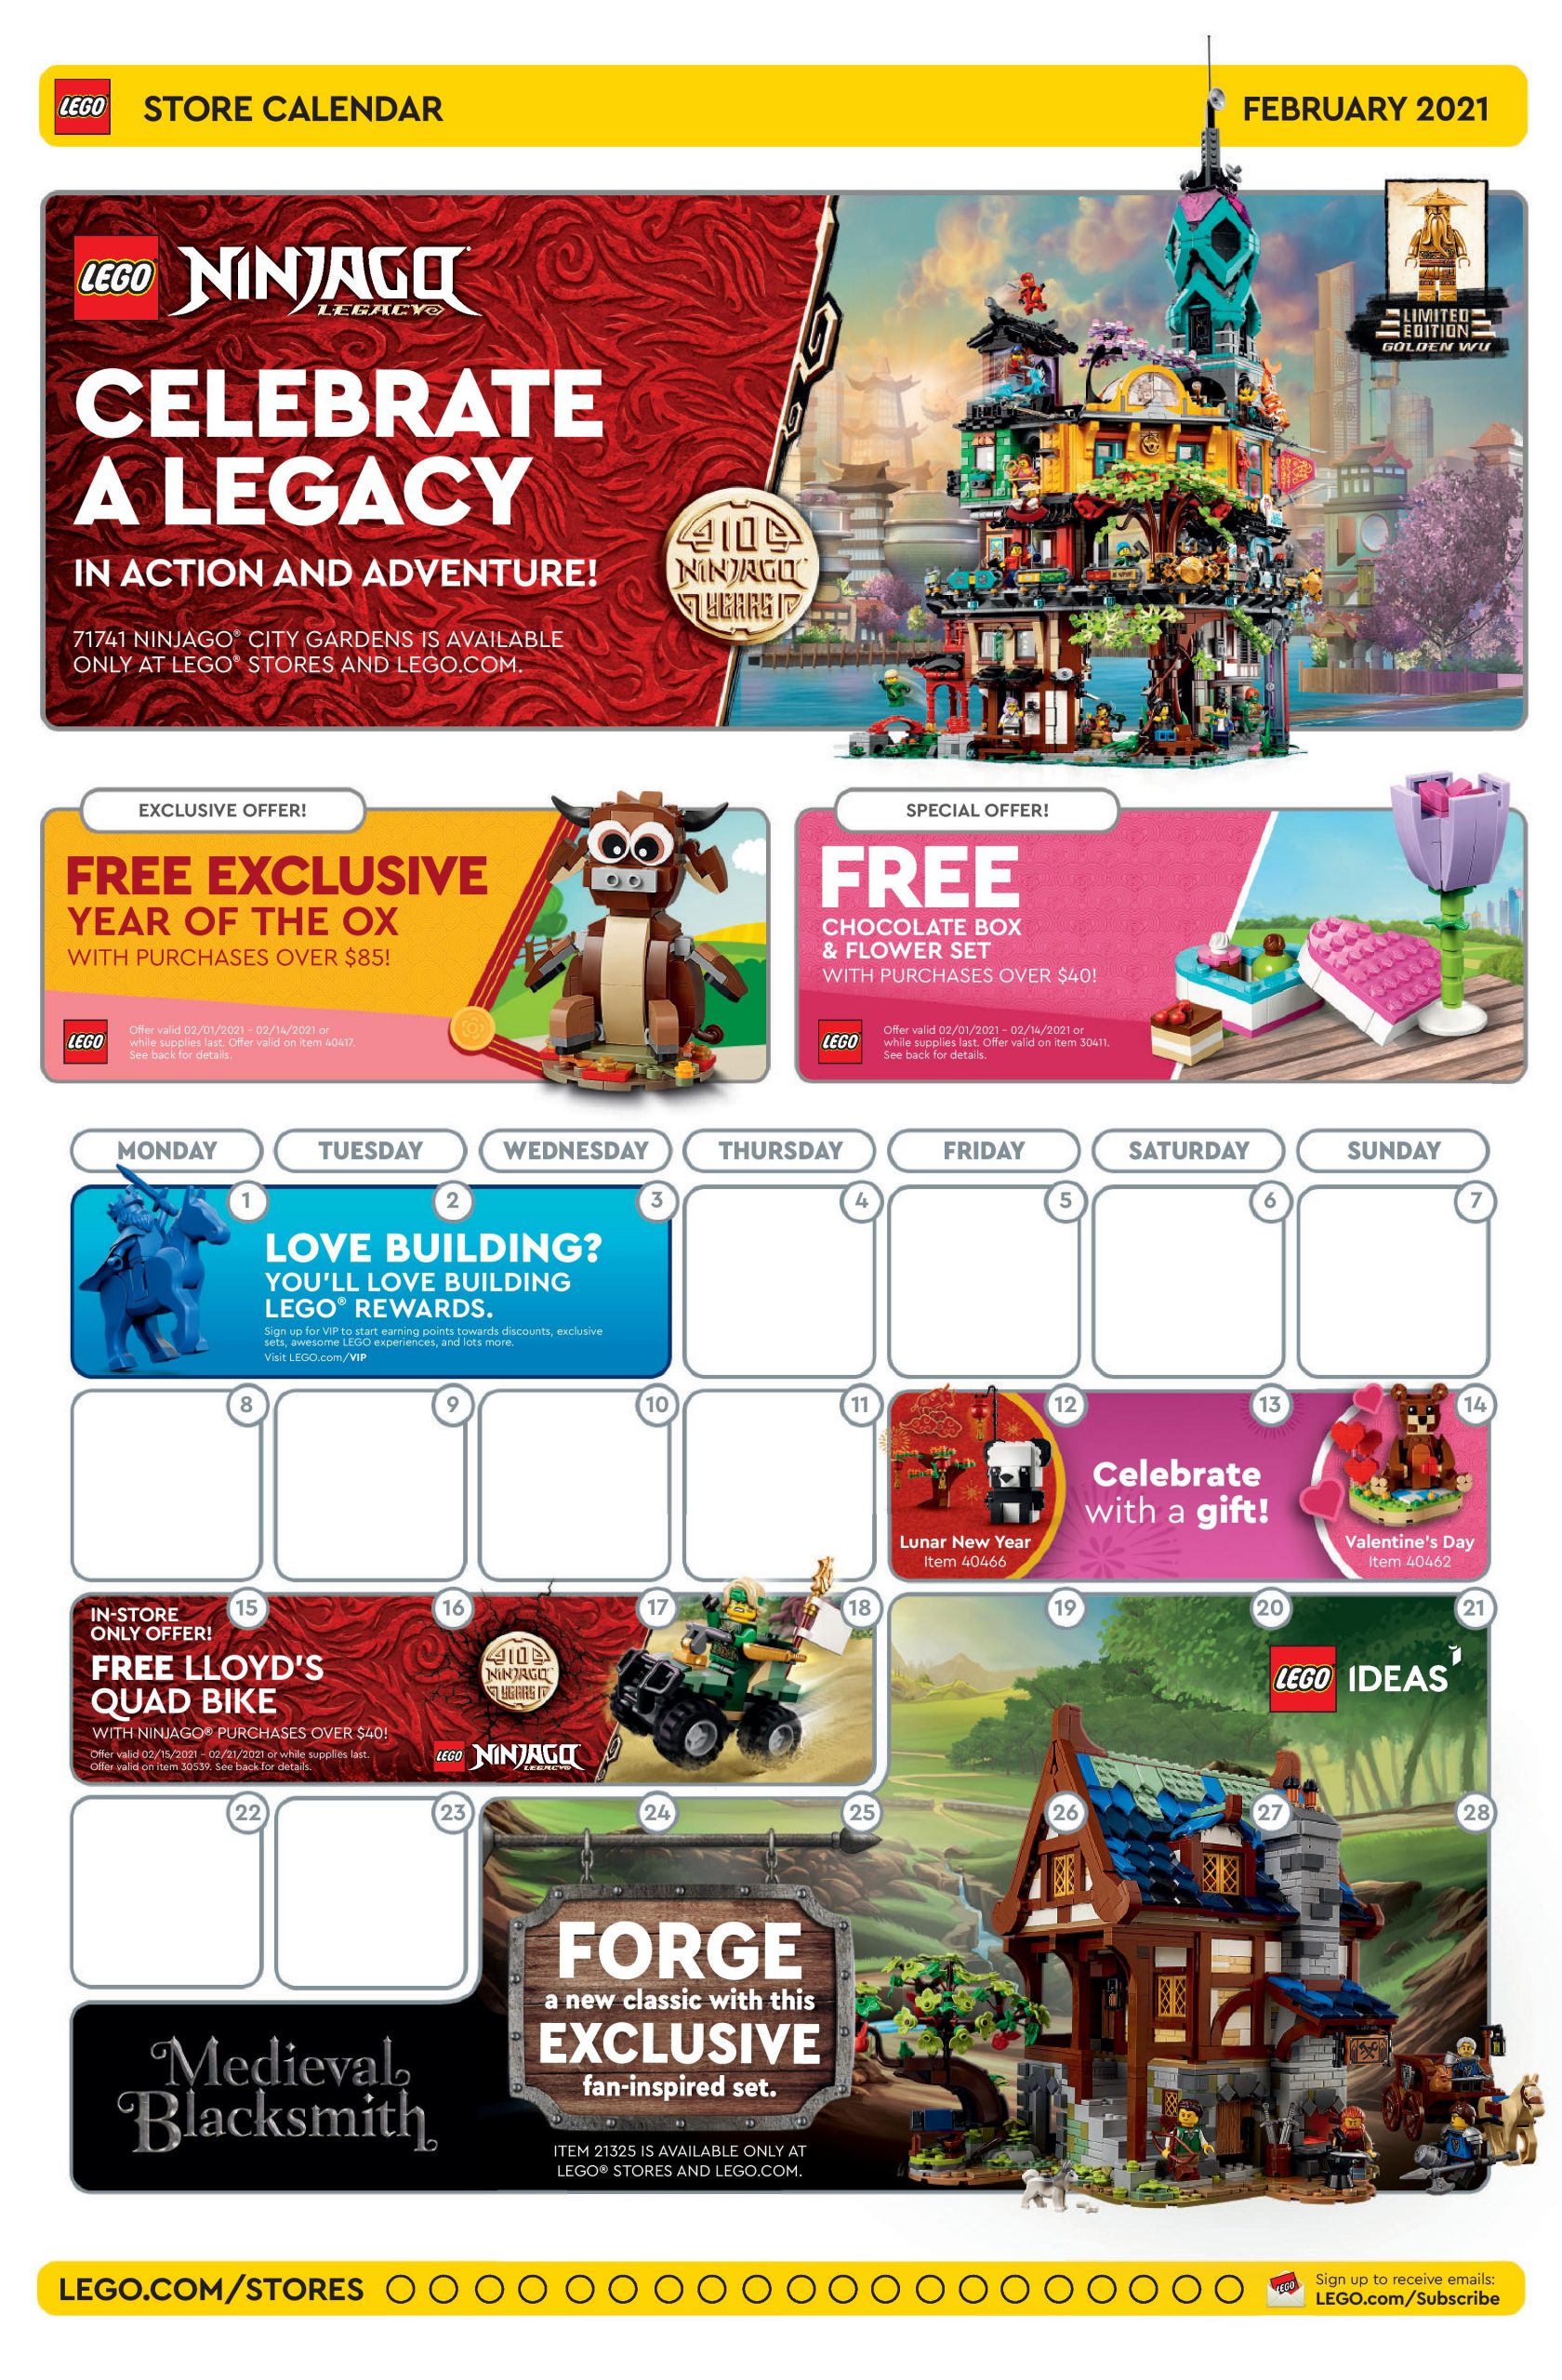 Lego January 2022 Calendar Lego February 2021 Store Calendar Promotions & Events - The Brick Fan